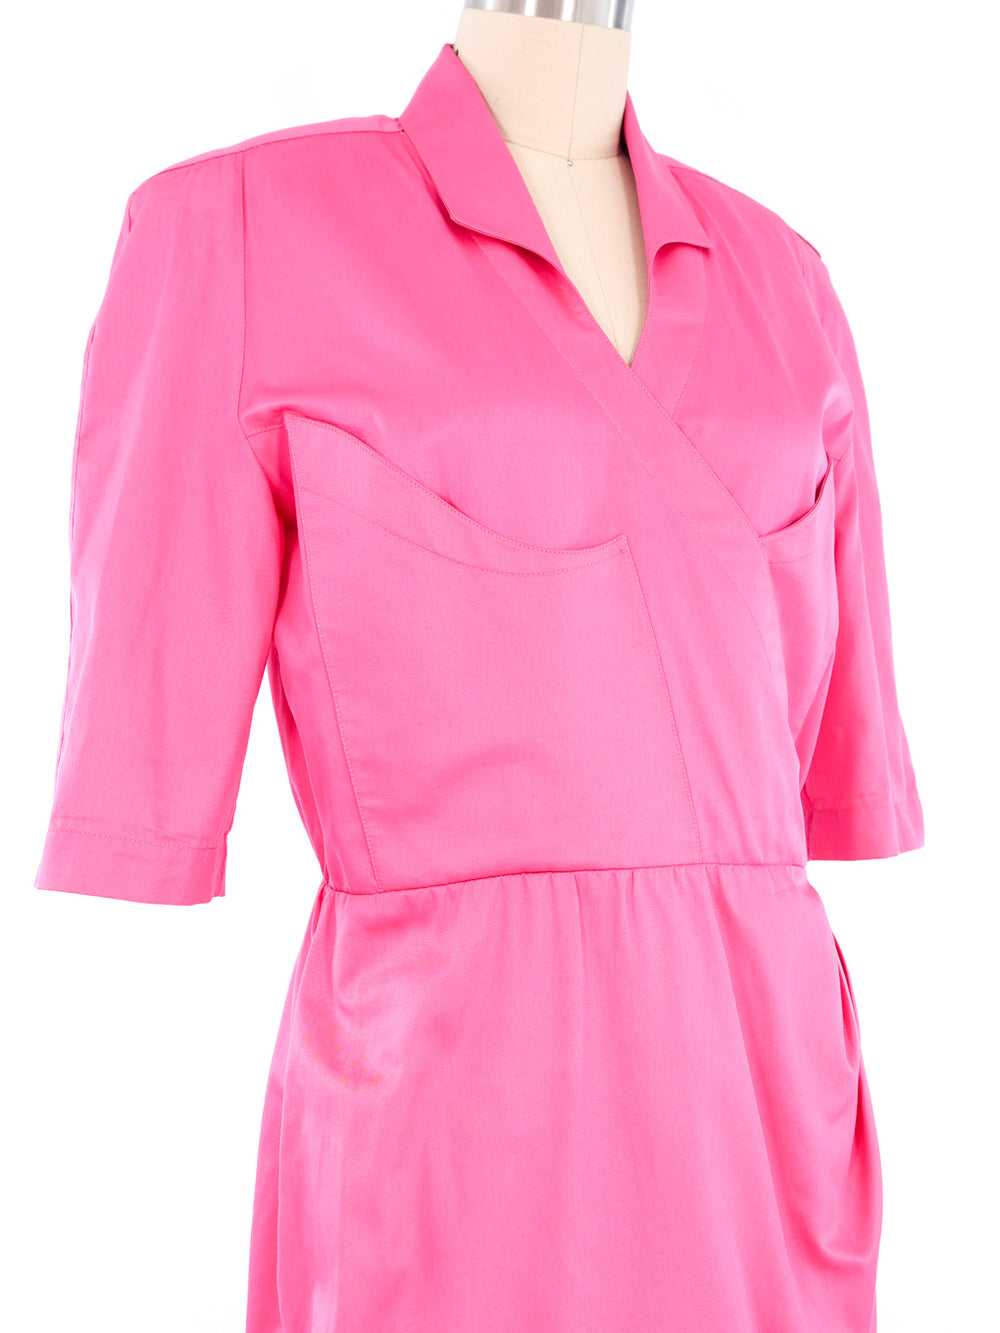 Thierry Mugler Pink Wrap Front Dress - image 2